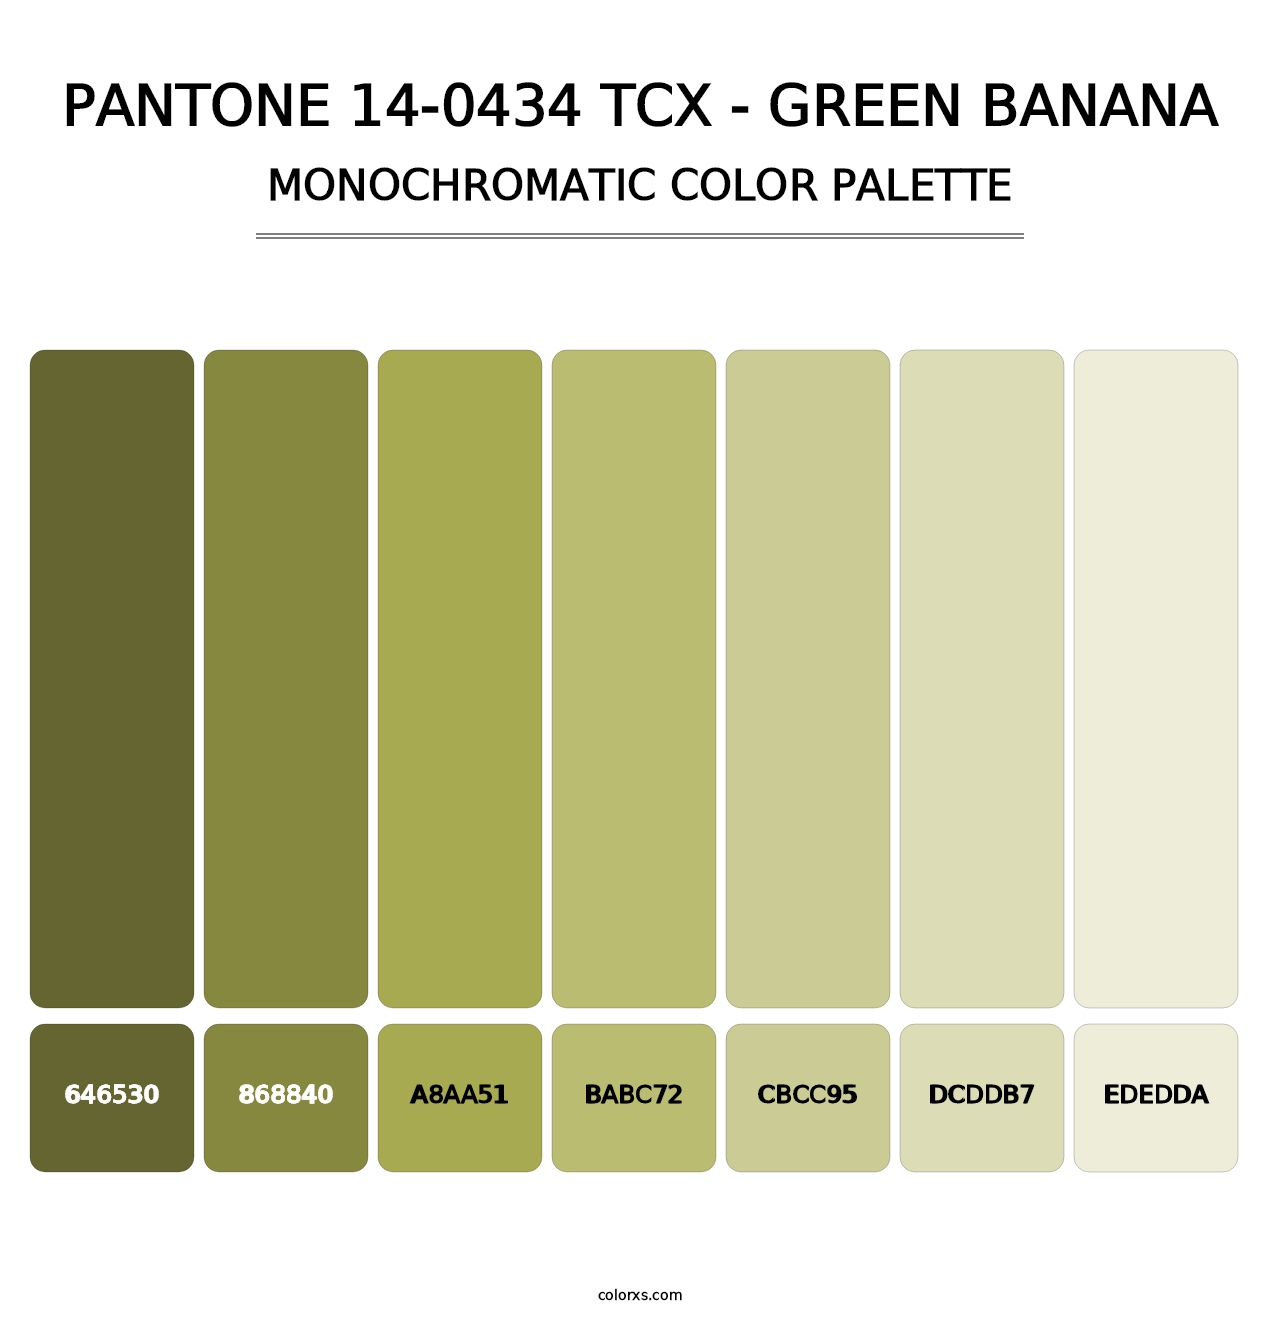 PANTONE 14-0434 TCX - Green Banana - Monochromatic Color Palette